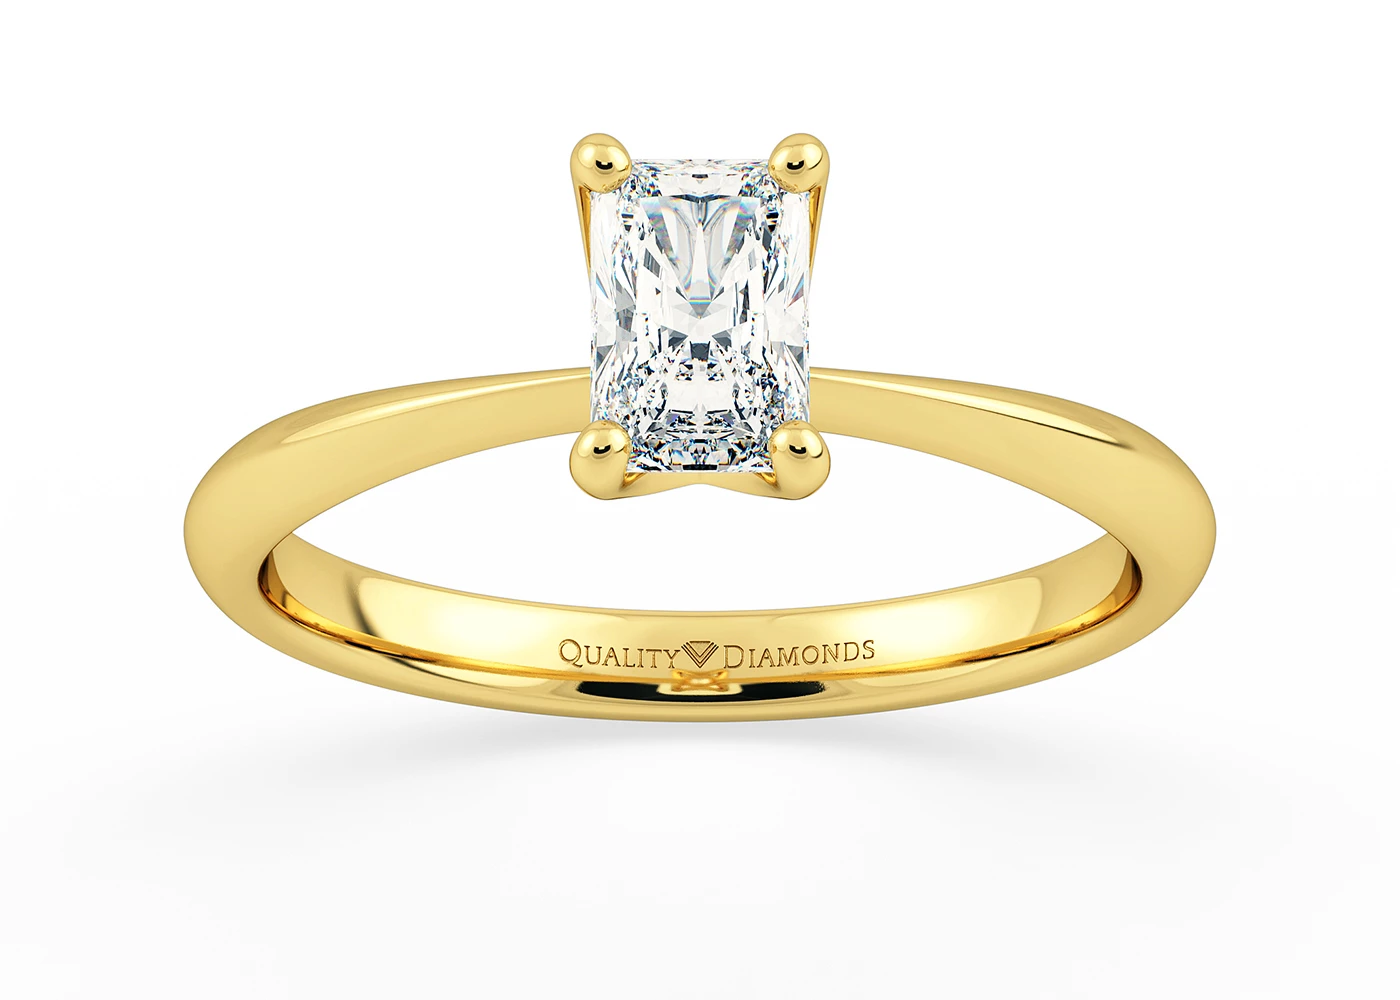 Radiant Amorette Diamond Ring in 9K Yellow Gold